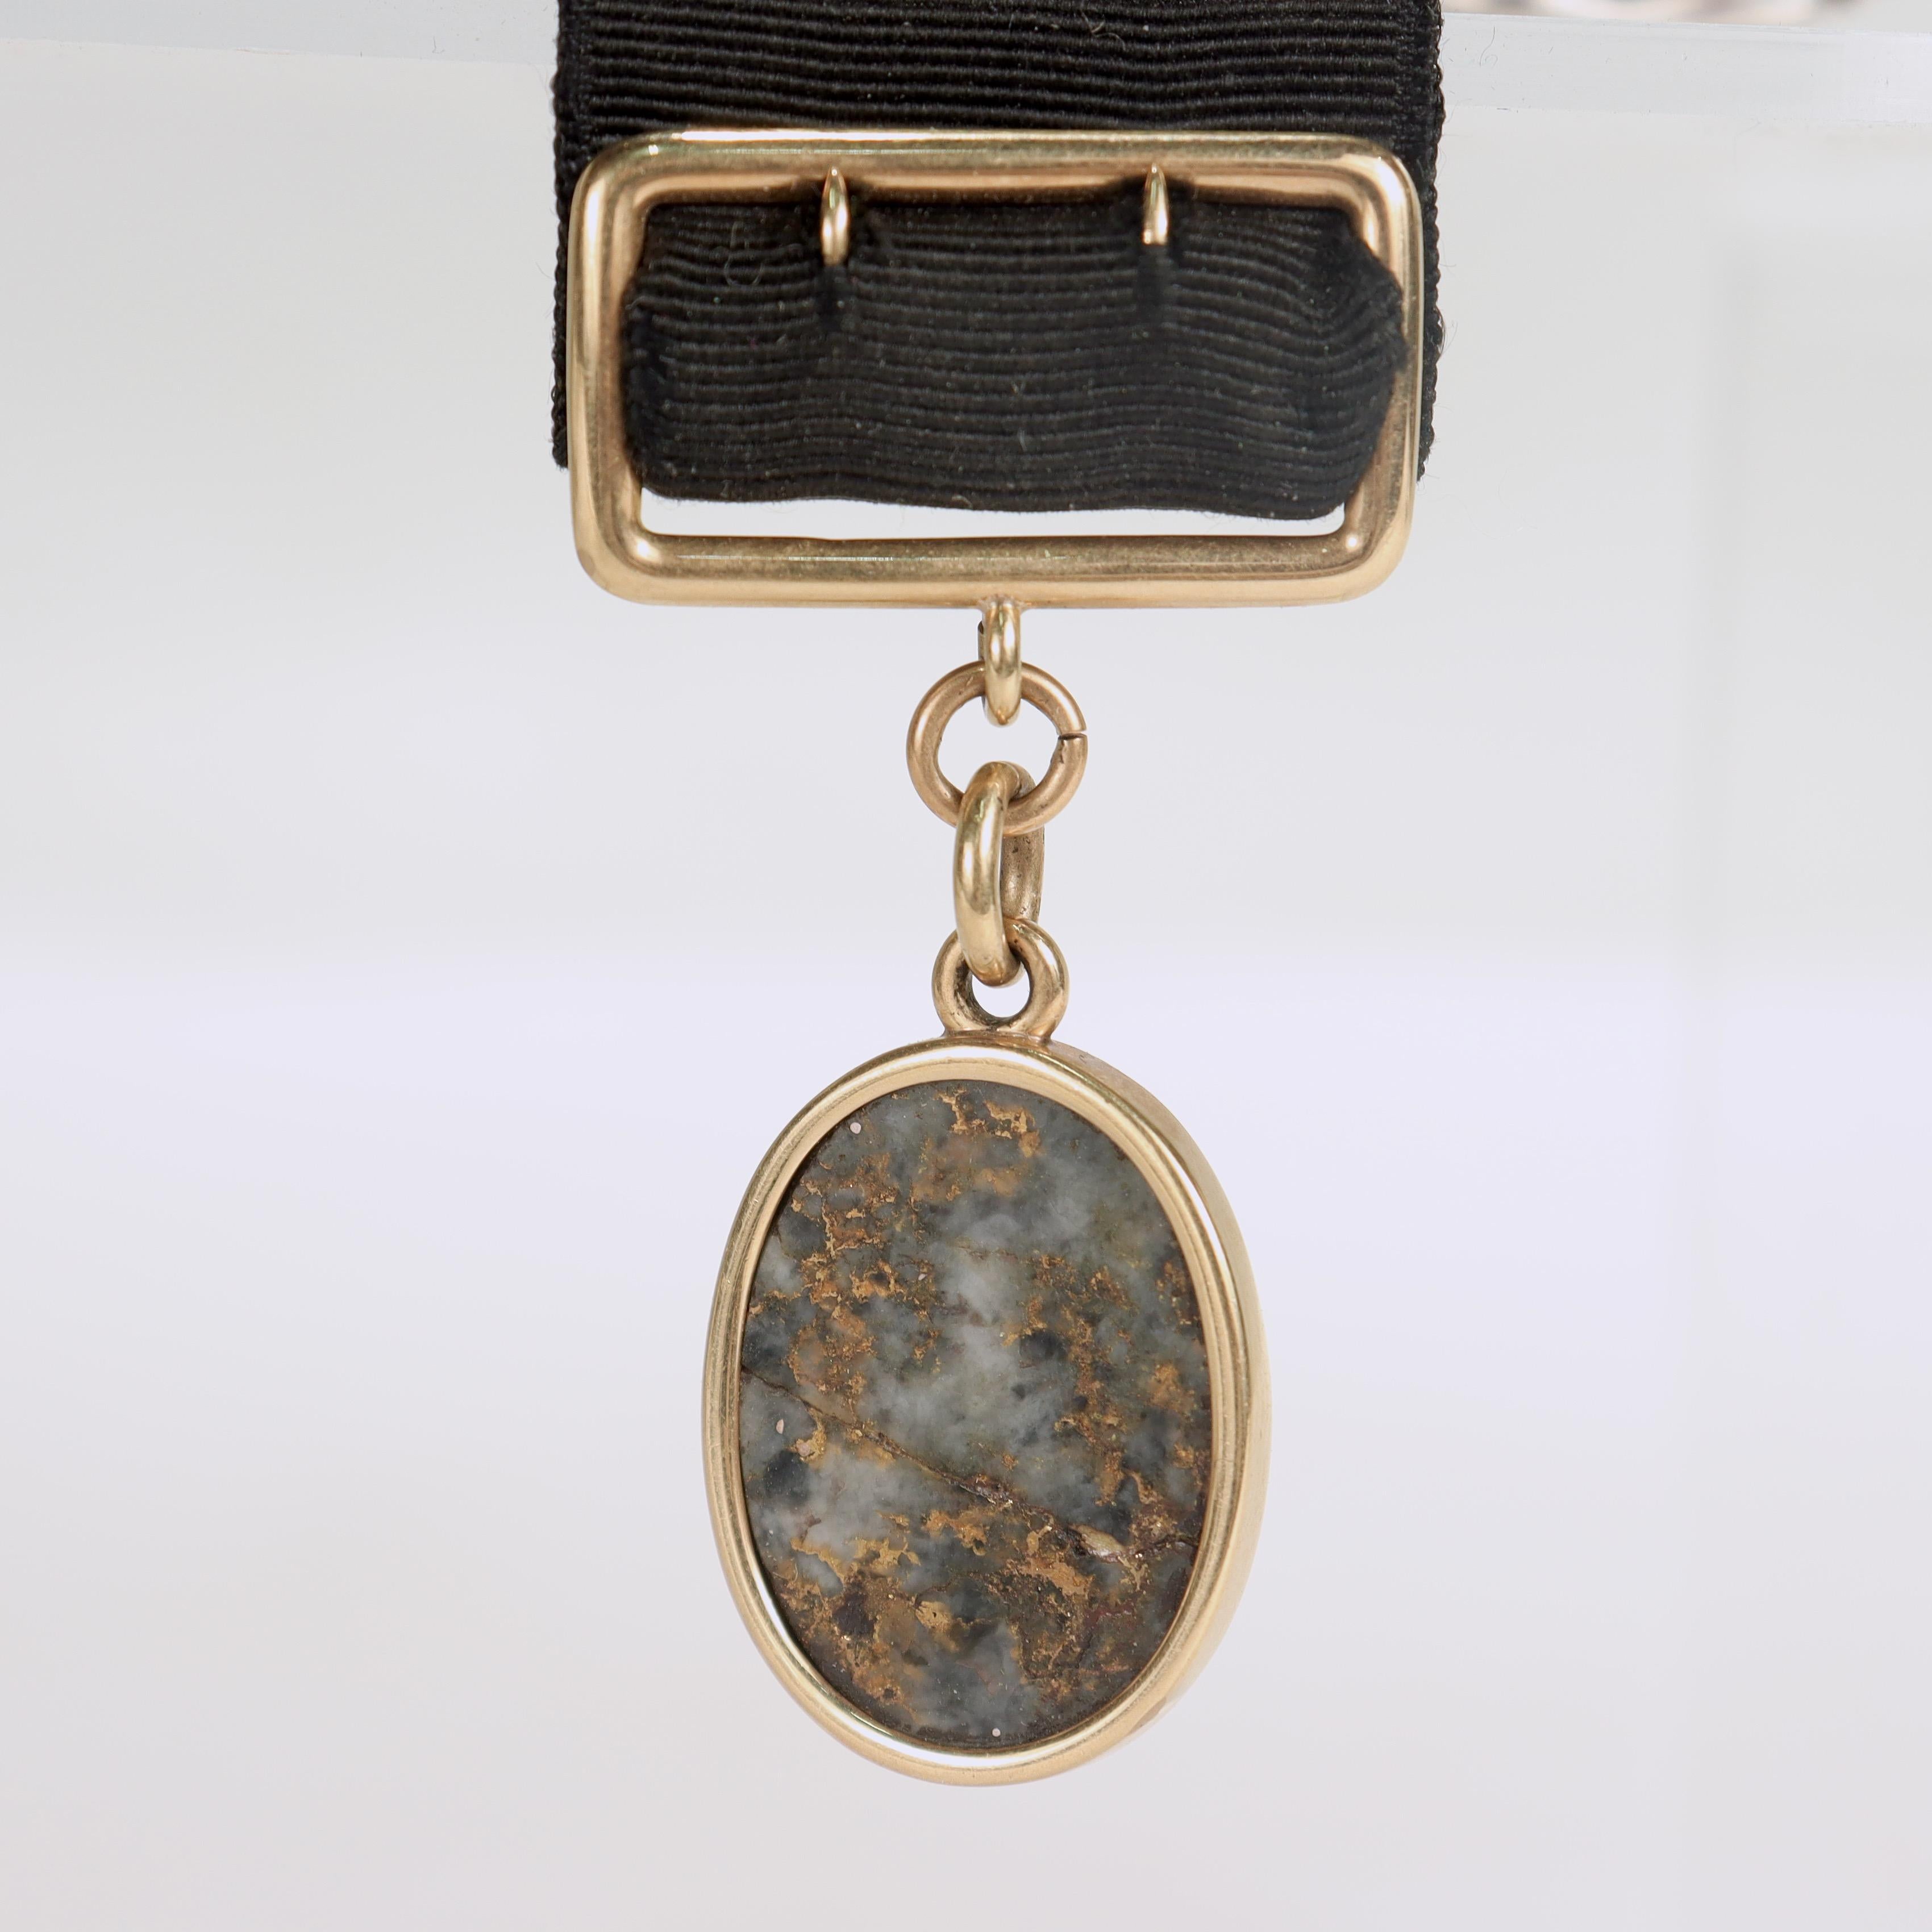 Edwardian Presentation Indian Penny / Gold Quartz Watch Fob from President Teddy Roosevelt For Sale